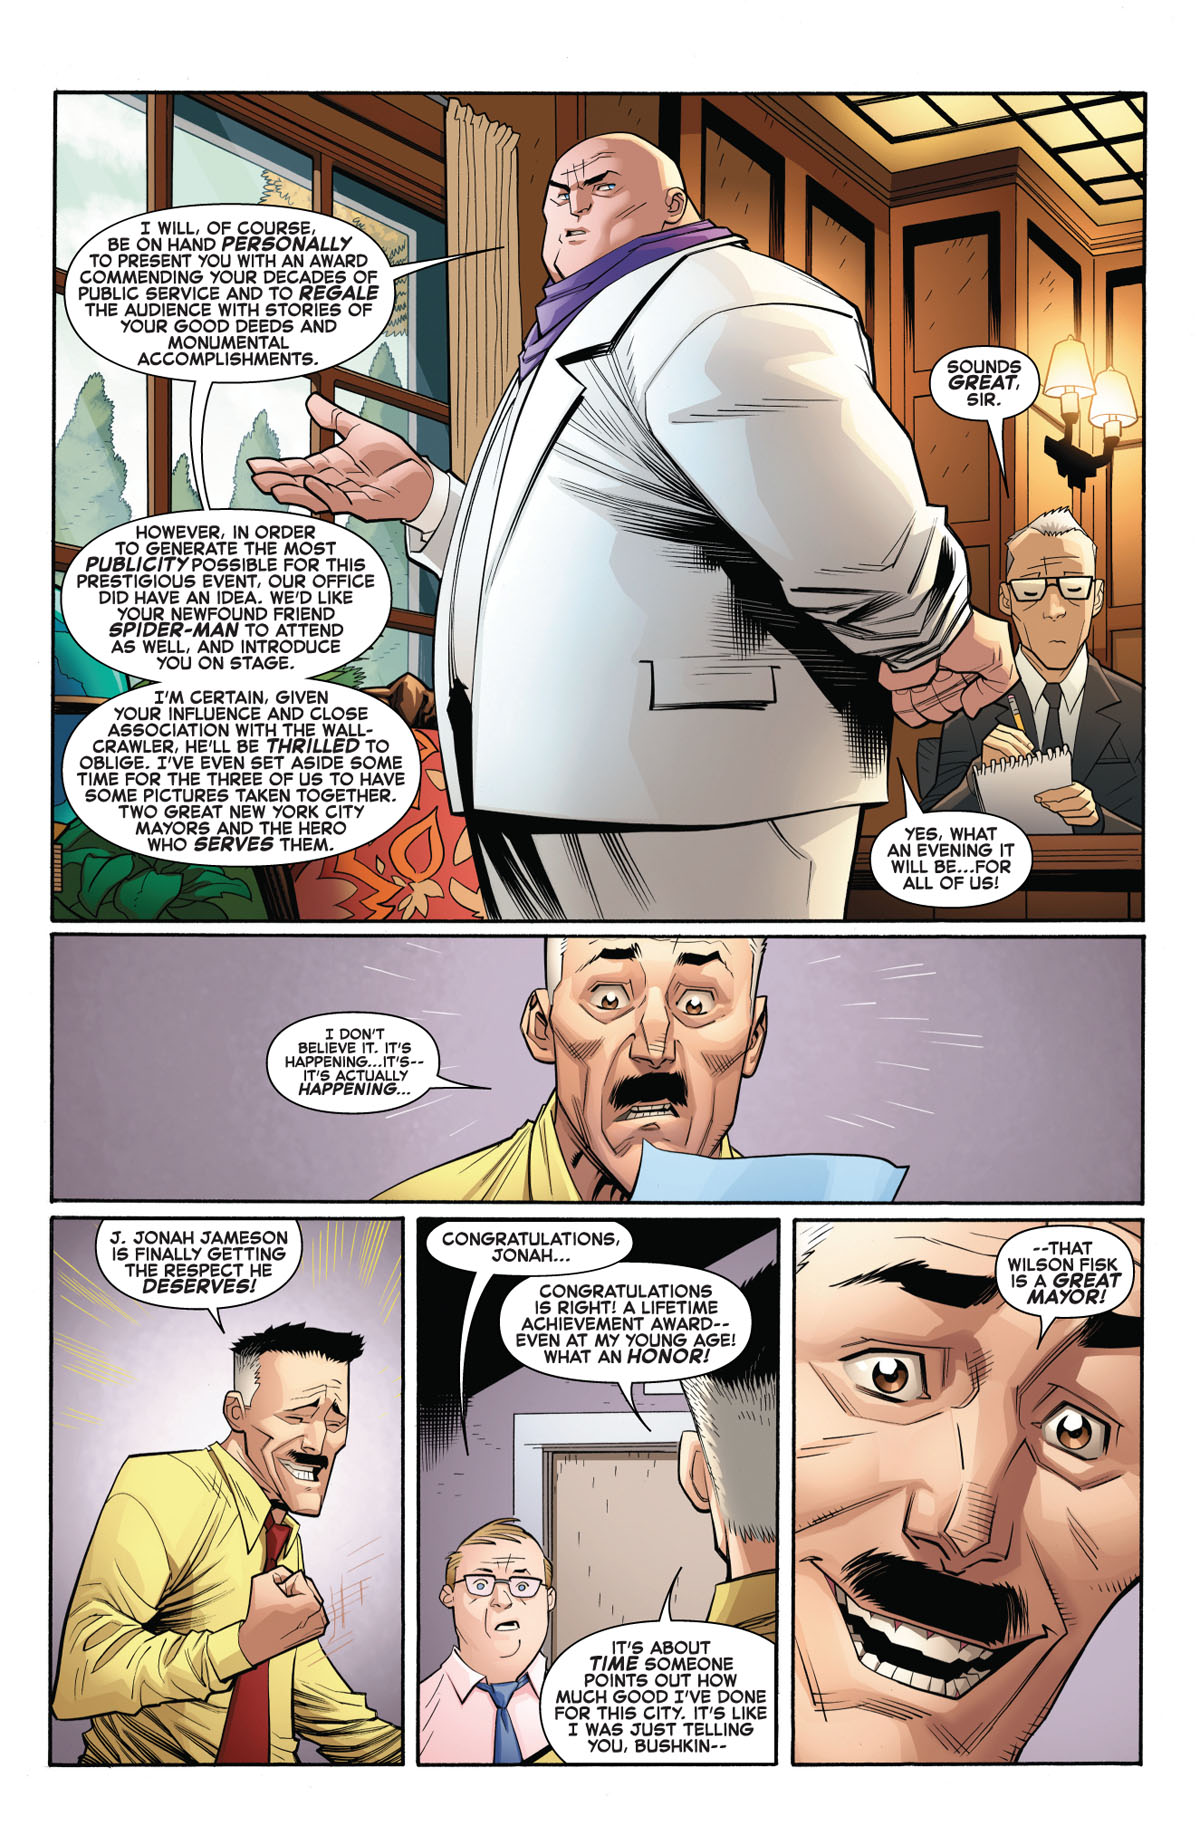 Amazing Spider-Man #11 page 5